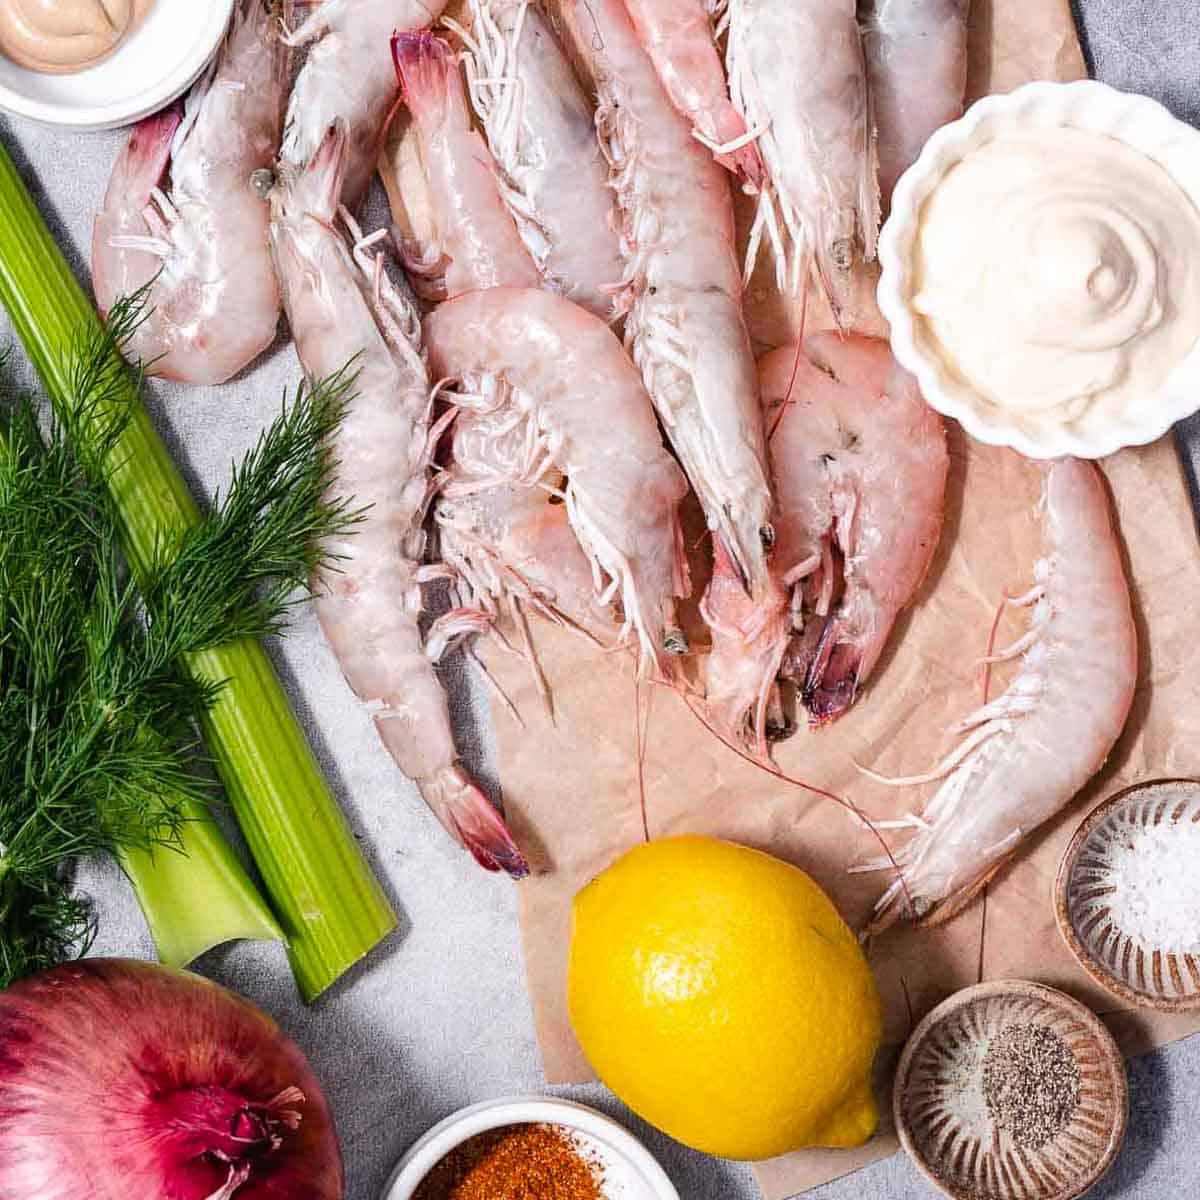 shrimp salad ingredients including shrimp, mayonnaise, old bay and celery.